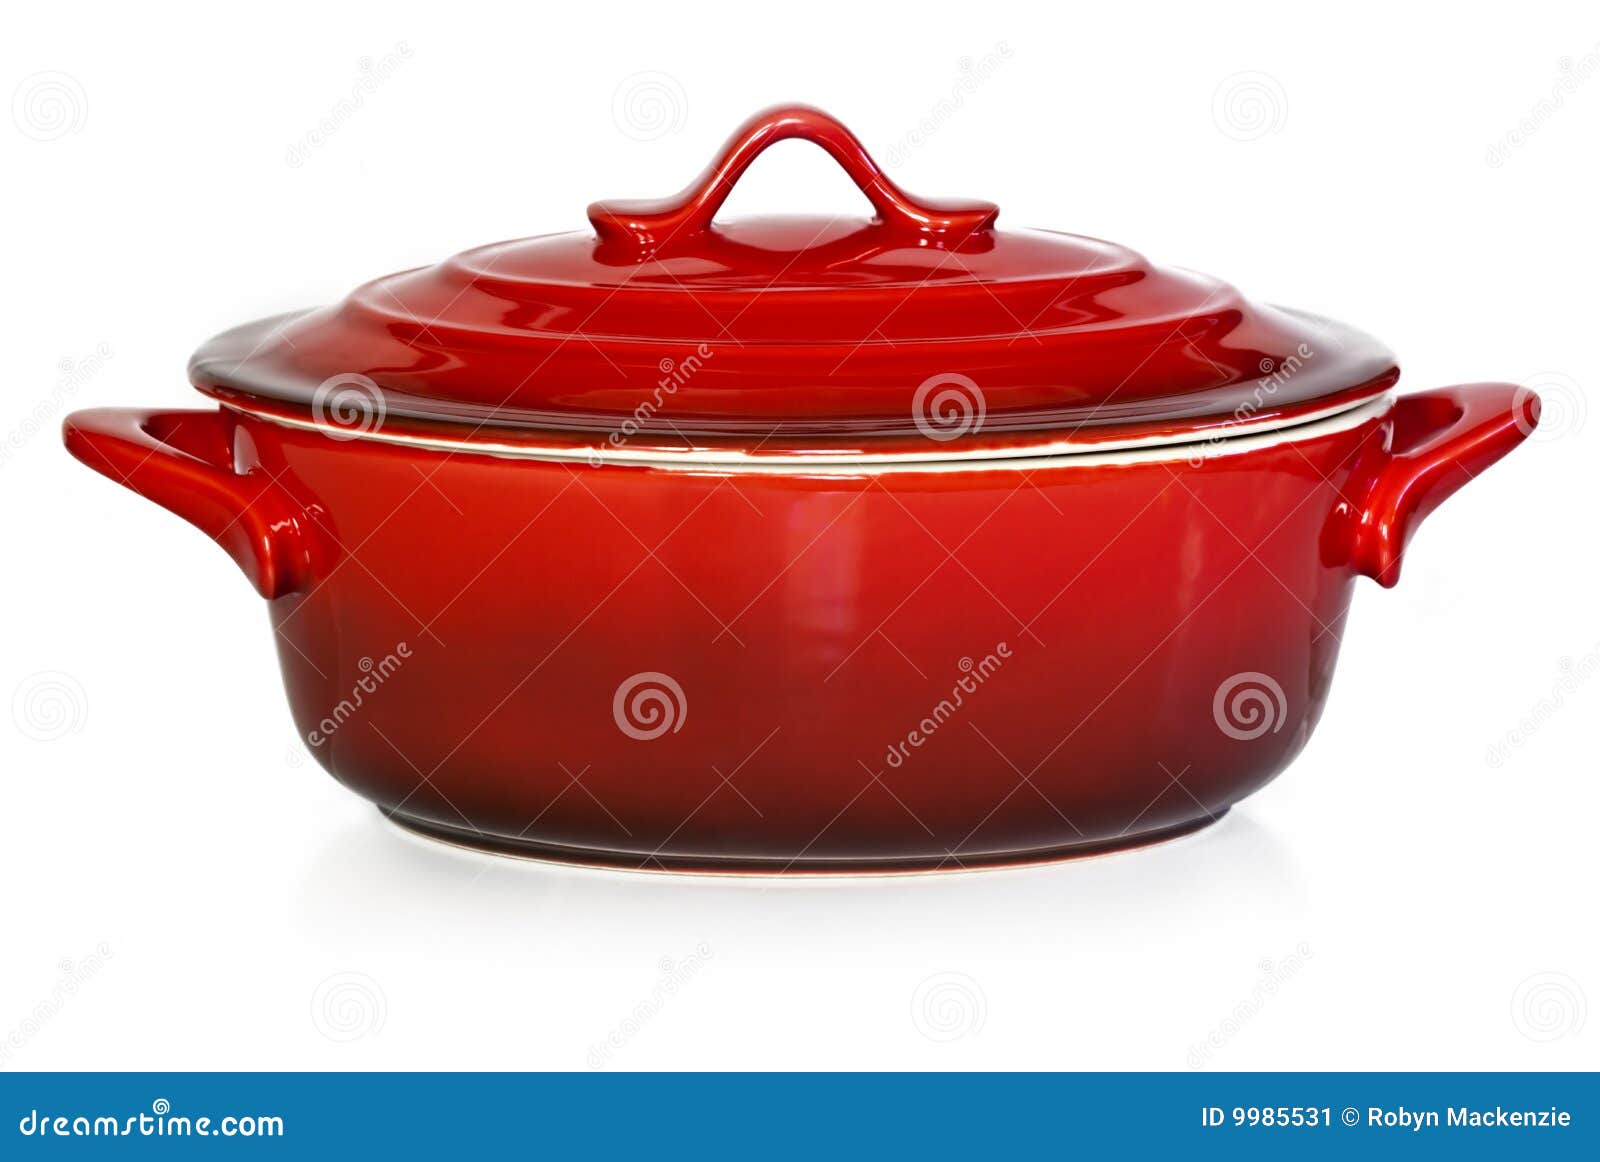 red crock pot